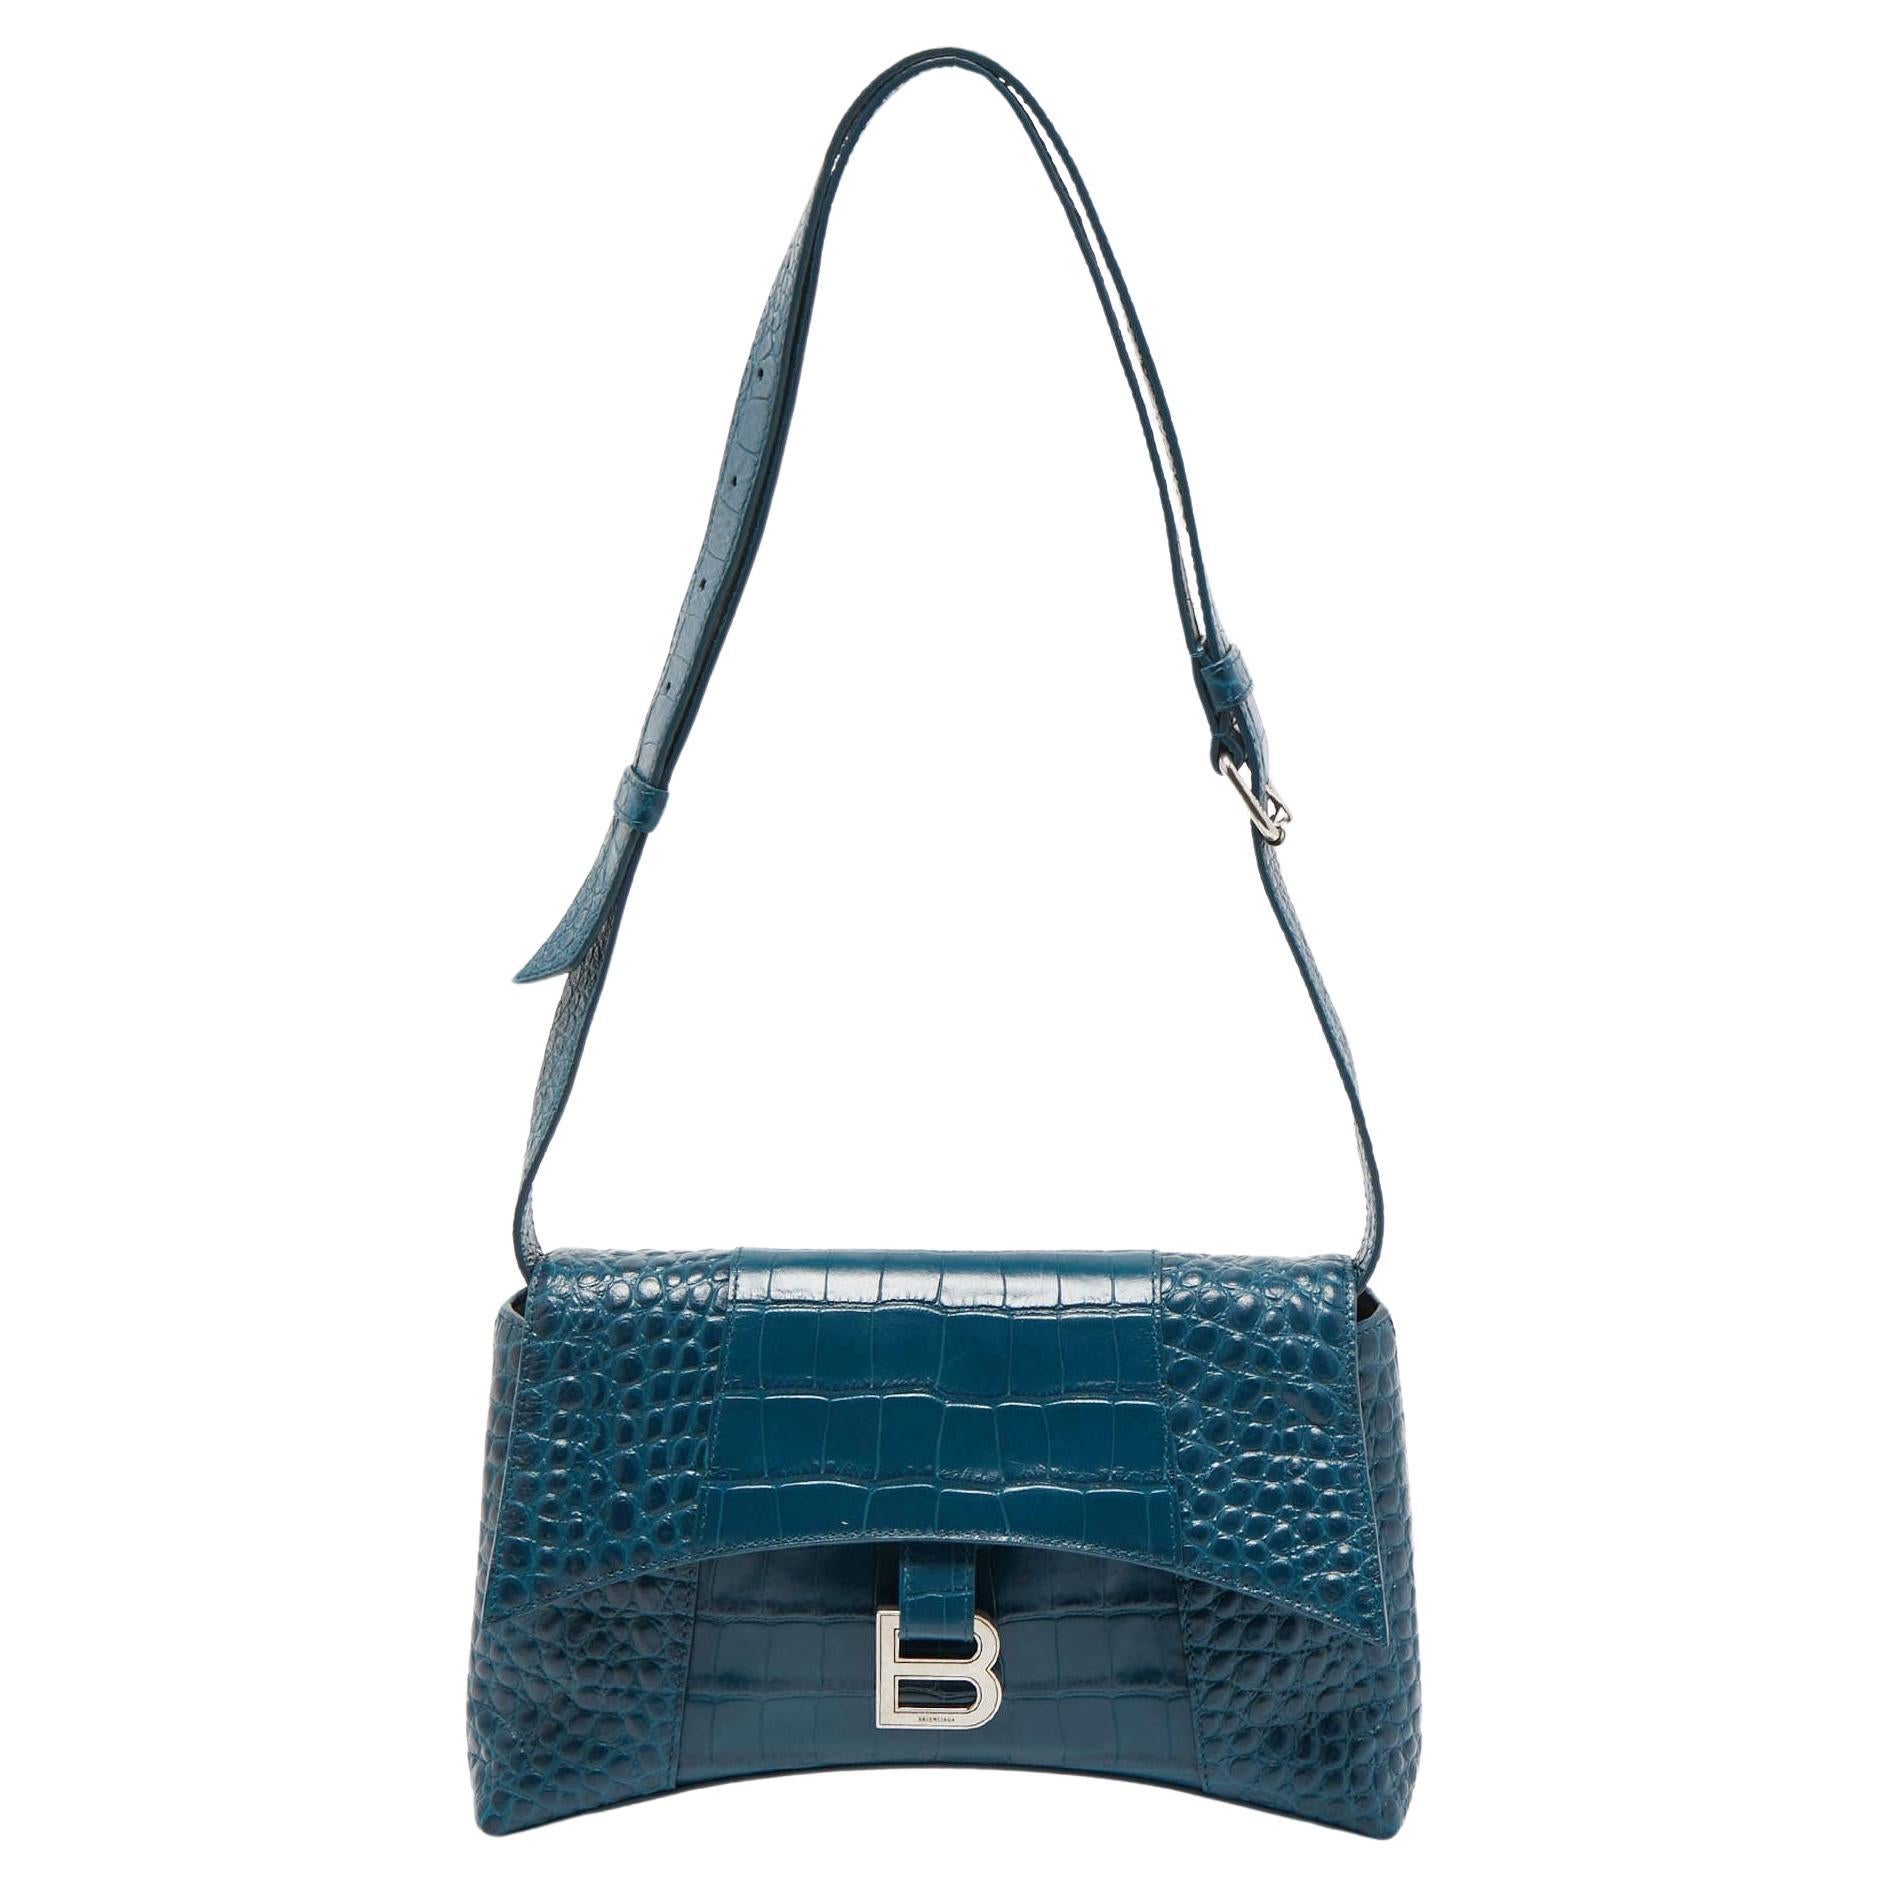 Balenciaga Dark Teal Blue Croc Embossed Leather XS Downtown Shoulder Bag